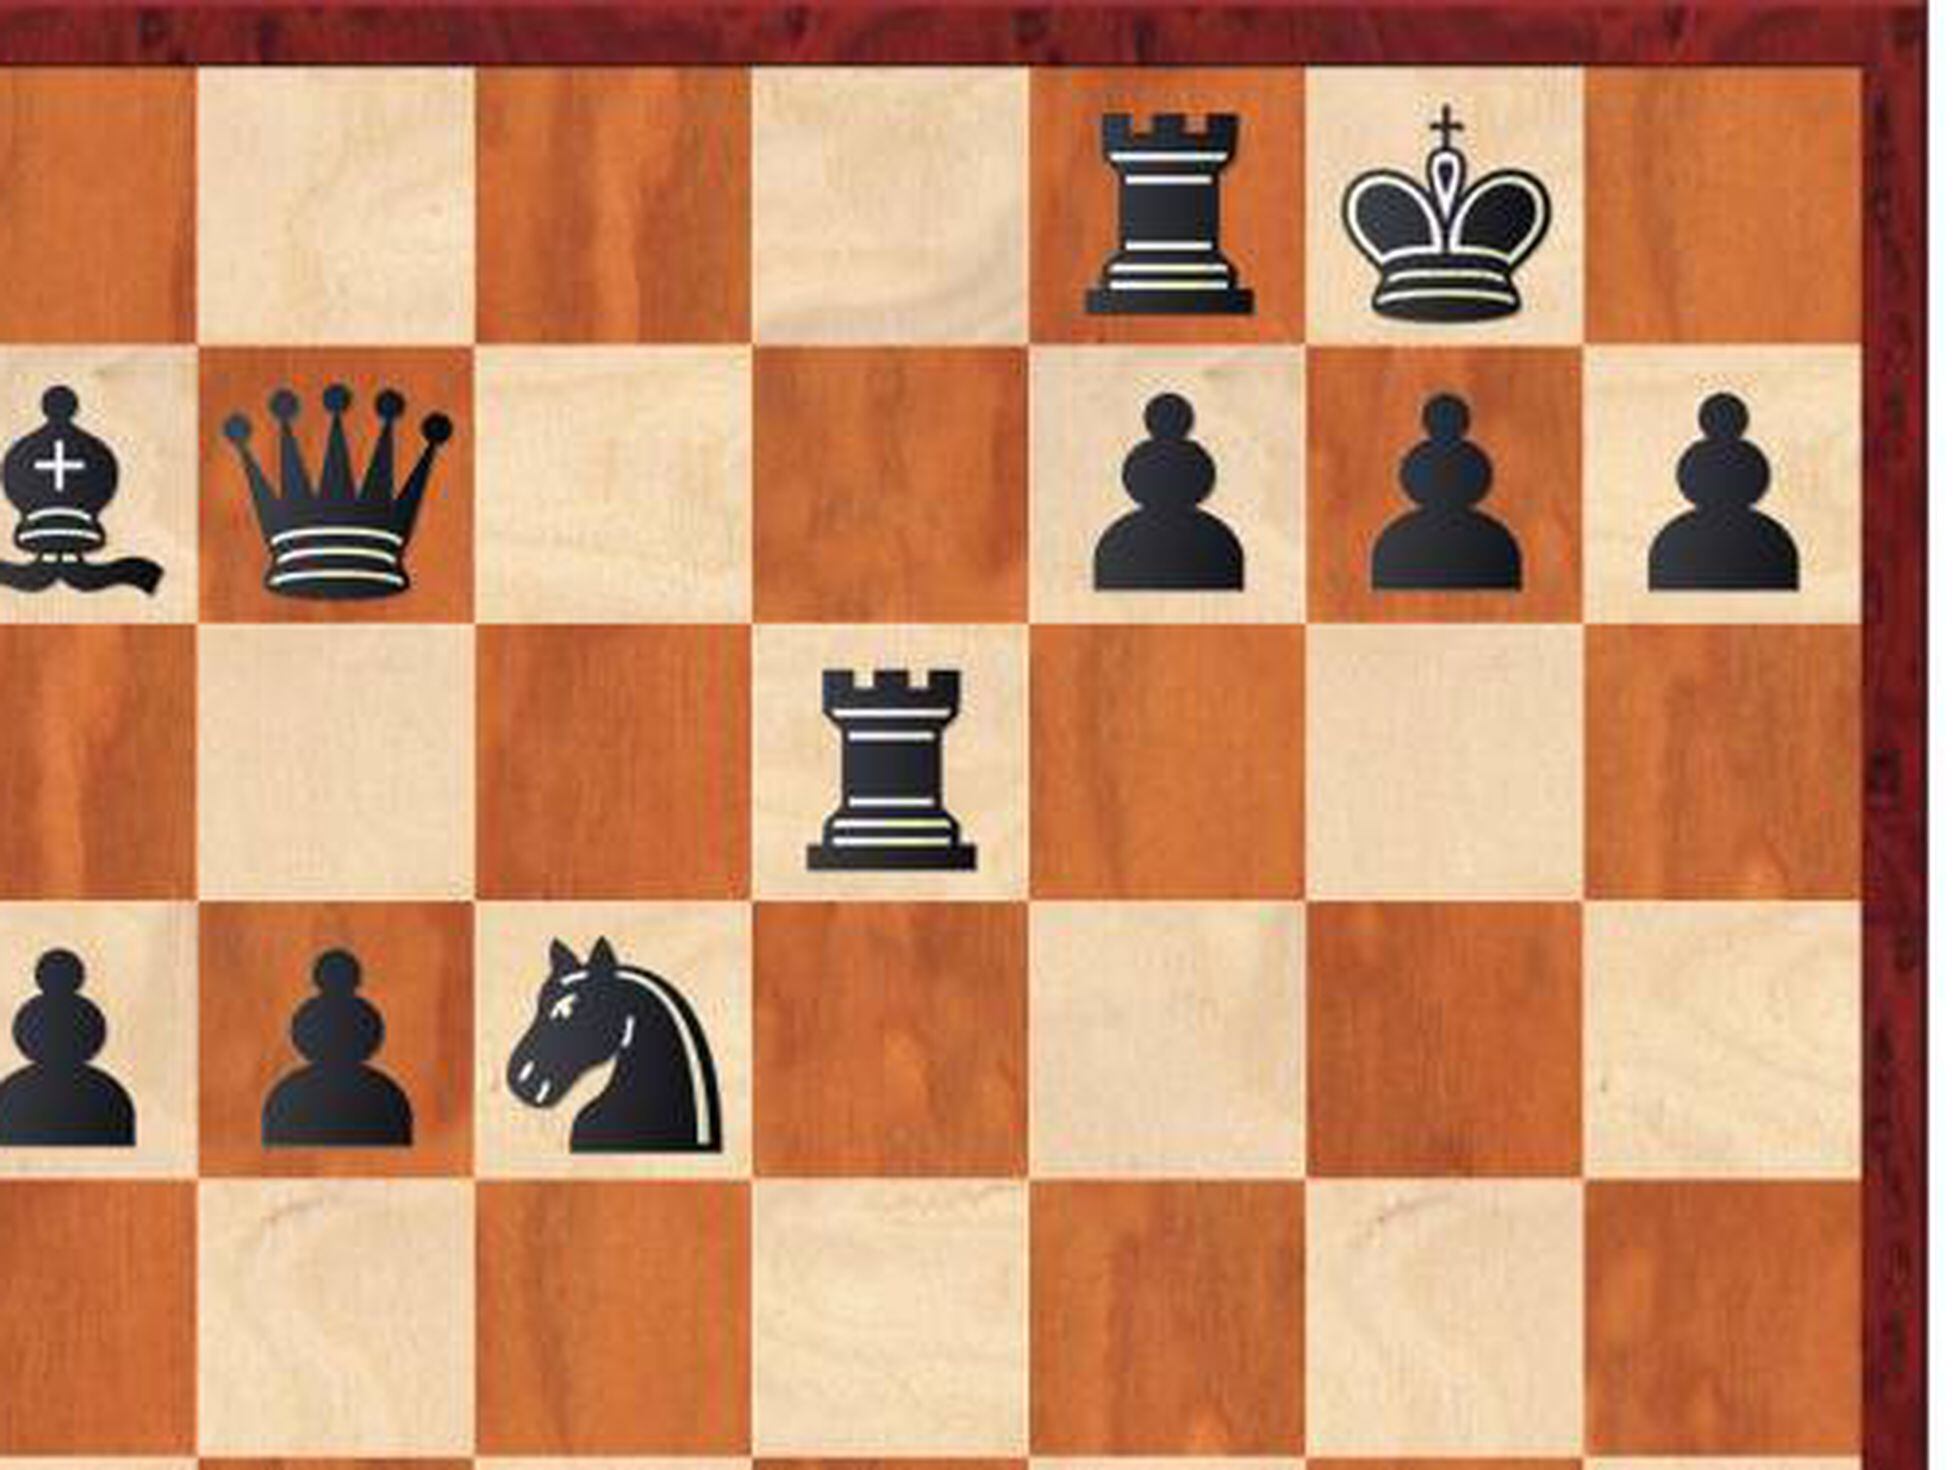 Caro-Kann ajedrez - Caro-Kann ajedrez social y educativo